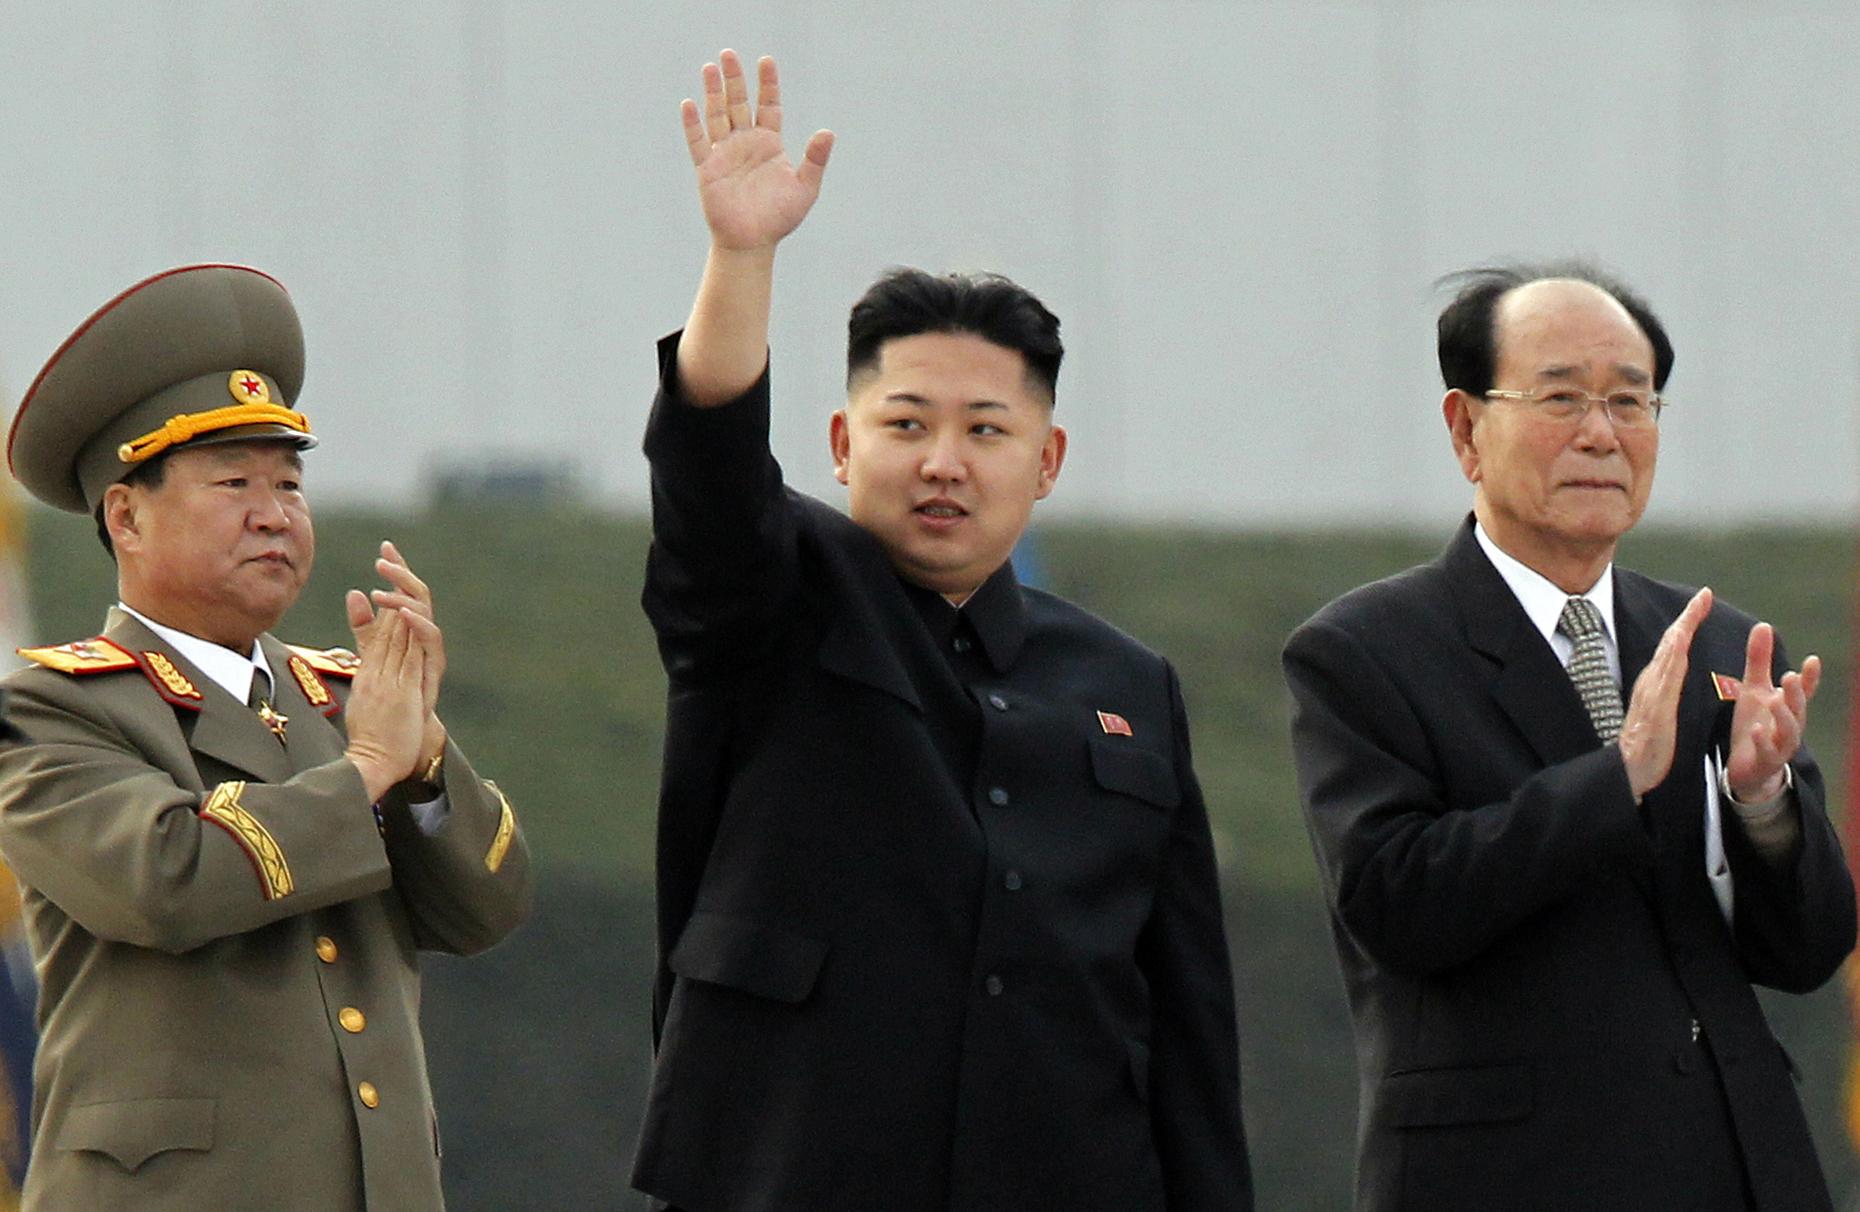 Факты о северной корее. Ким Чен ён. Президент Северной Кореи Ким Ир сена. Семья Ким Чен Ына. Ким Чен Ир и Ким Чен Ын.